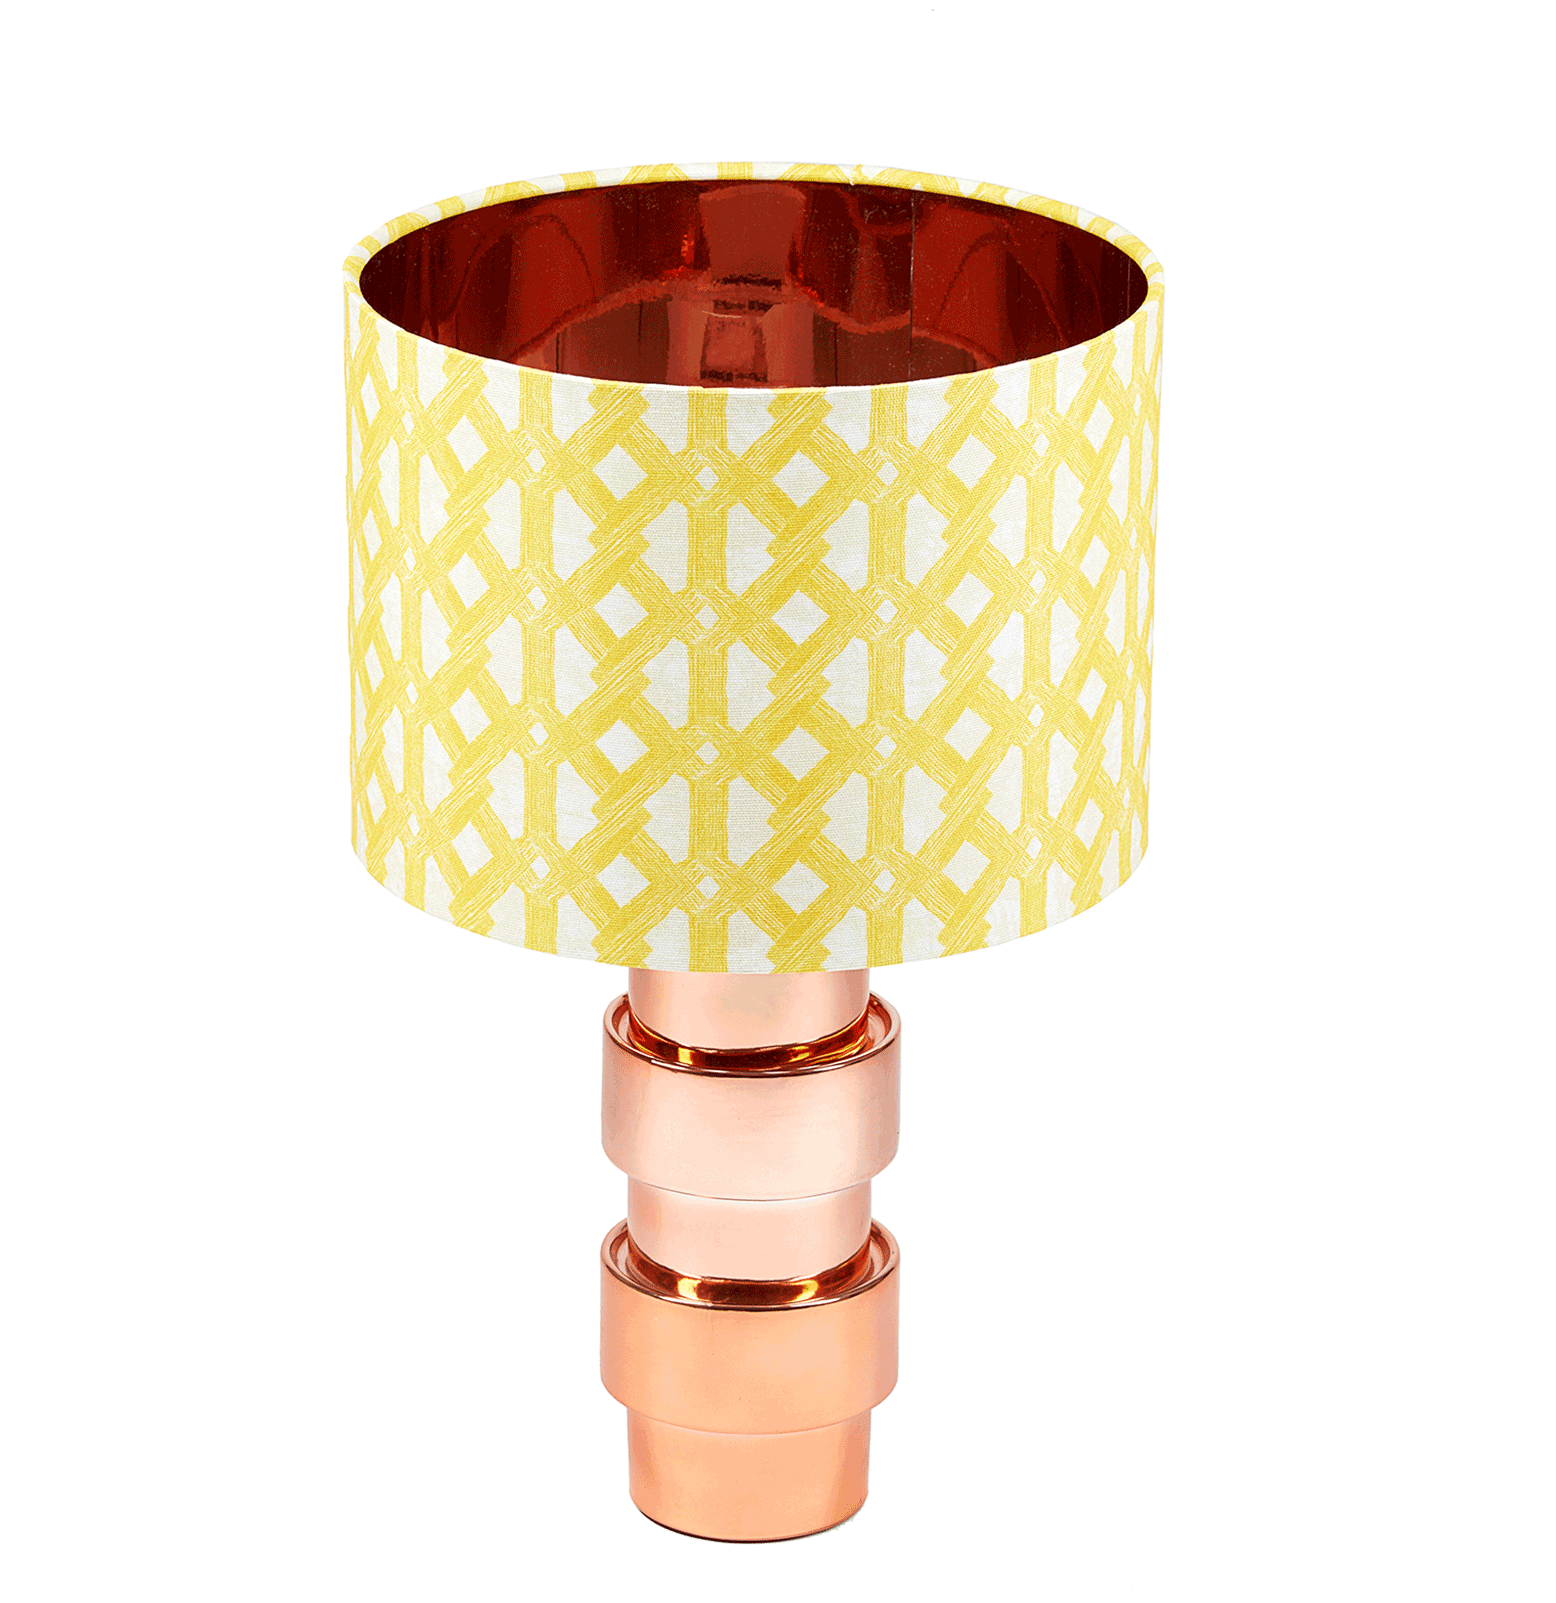 Elegant African batik print lampshade with bright yellow geometric pattern